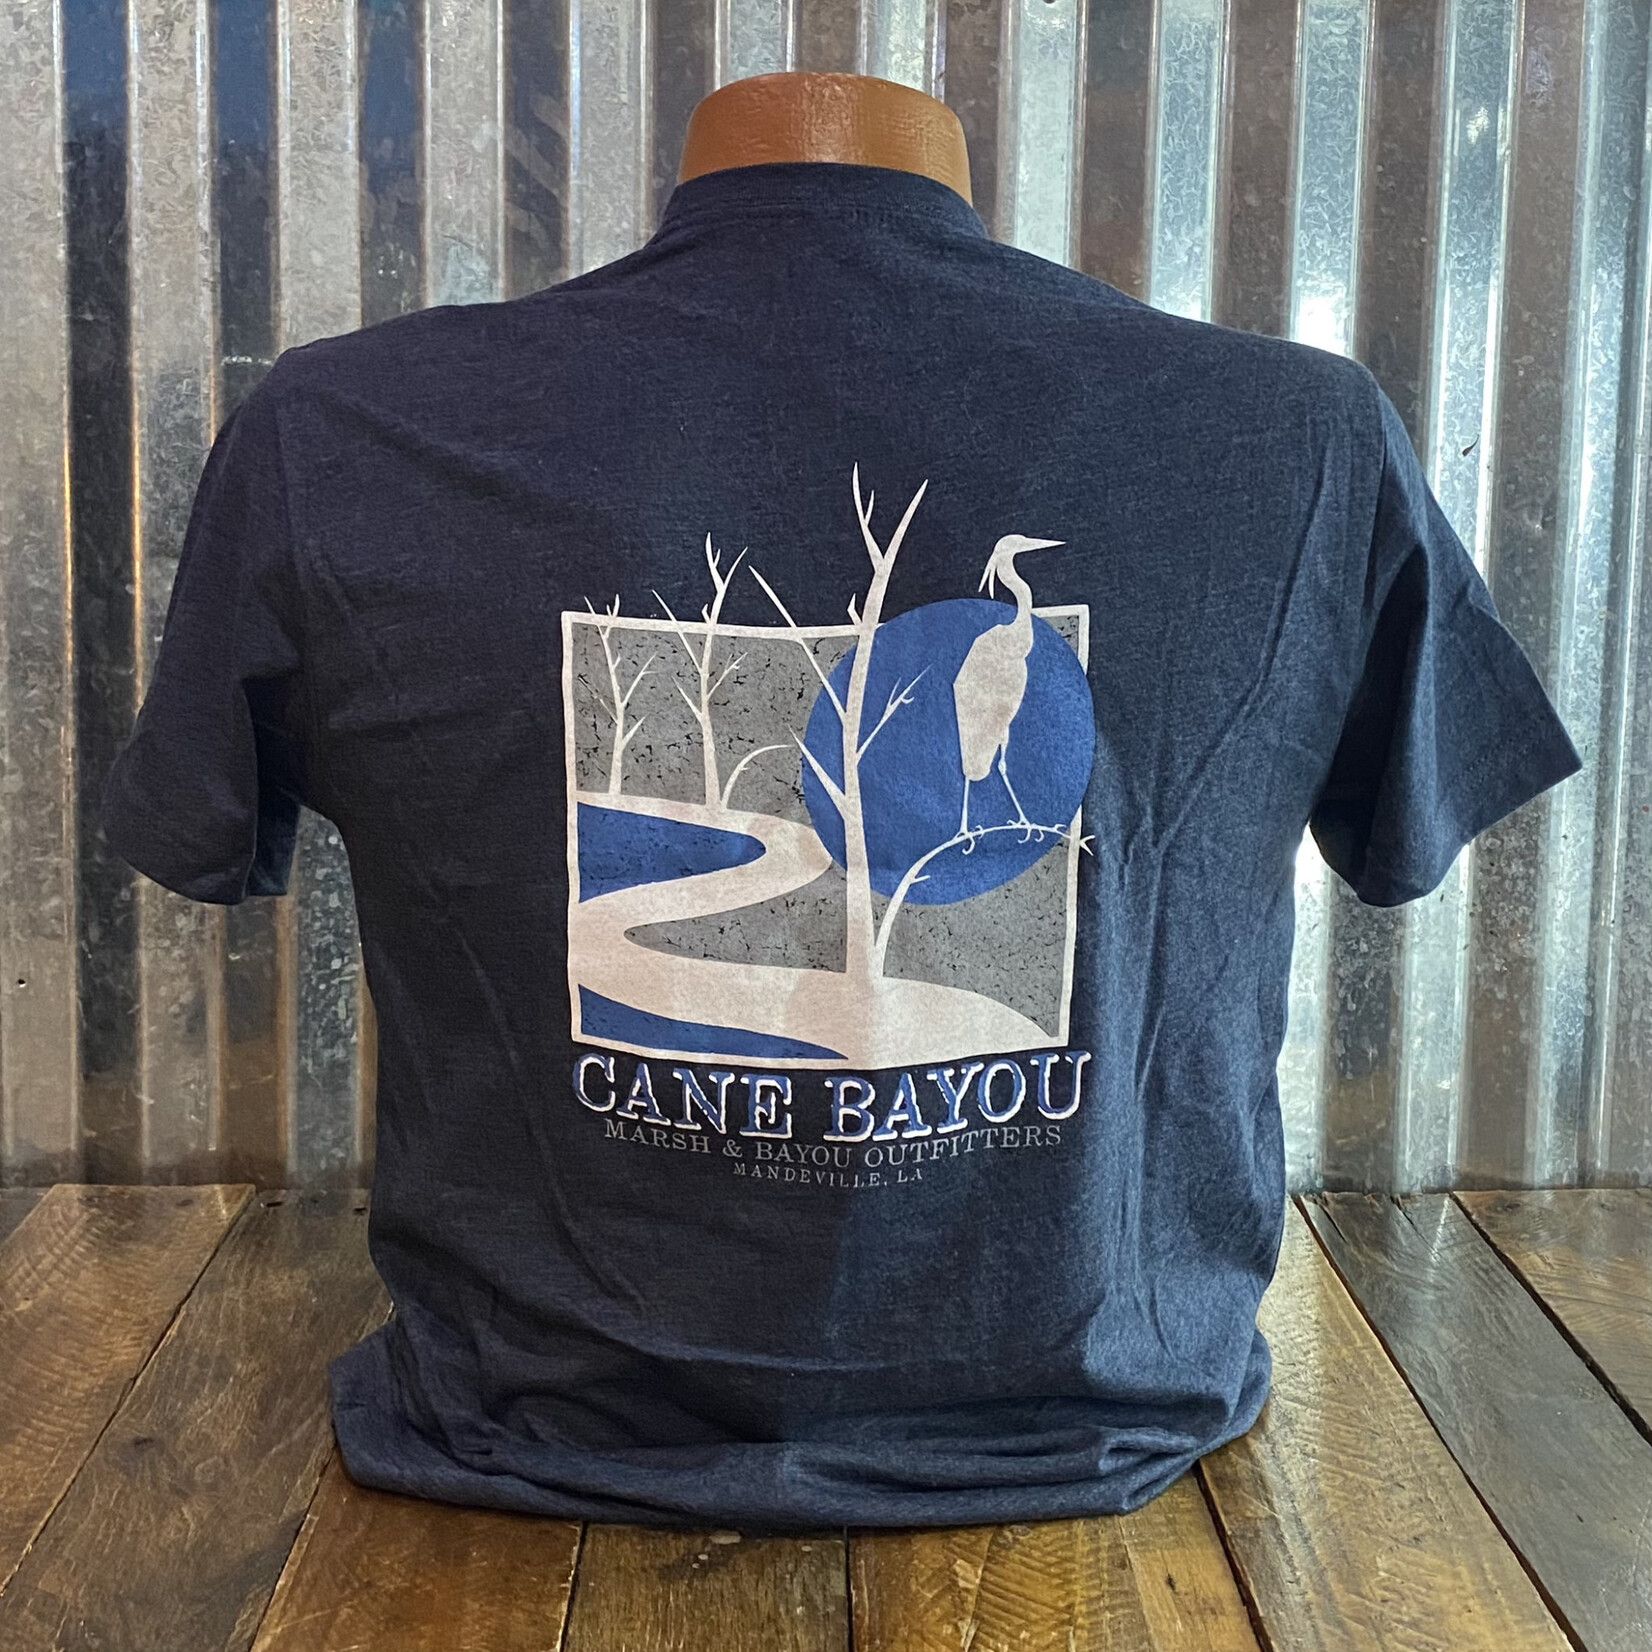 Marsh & Bayou Outfitters | Custom Tees "Cane Bayou"